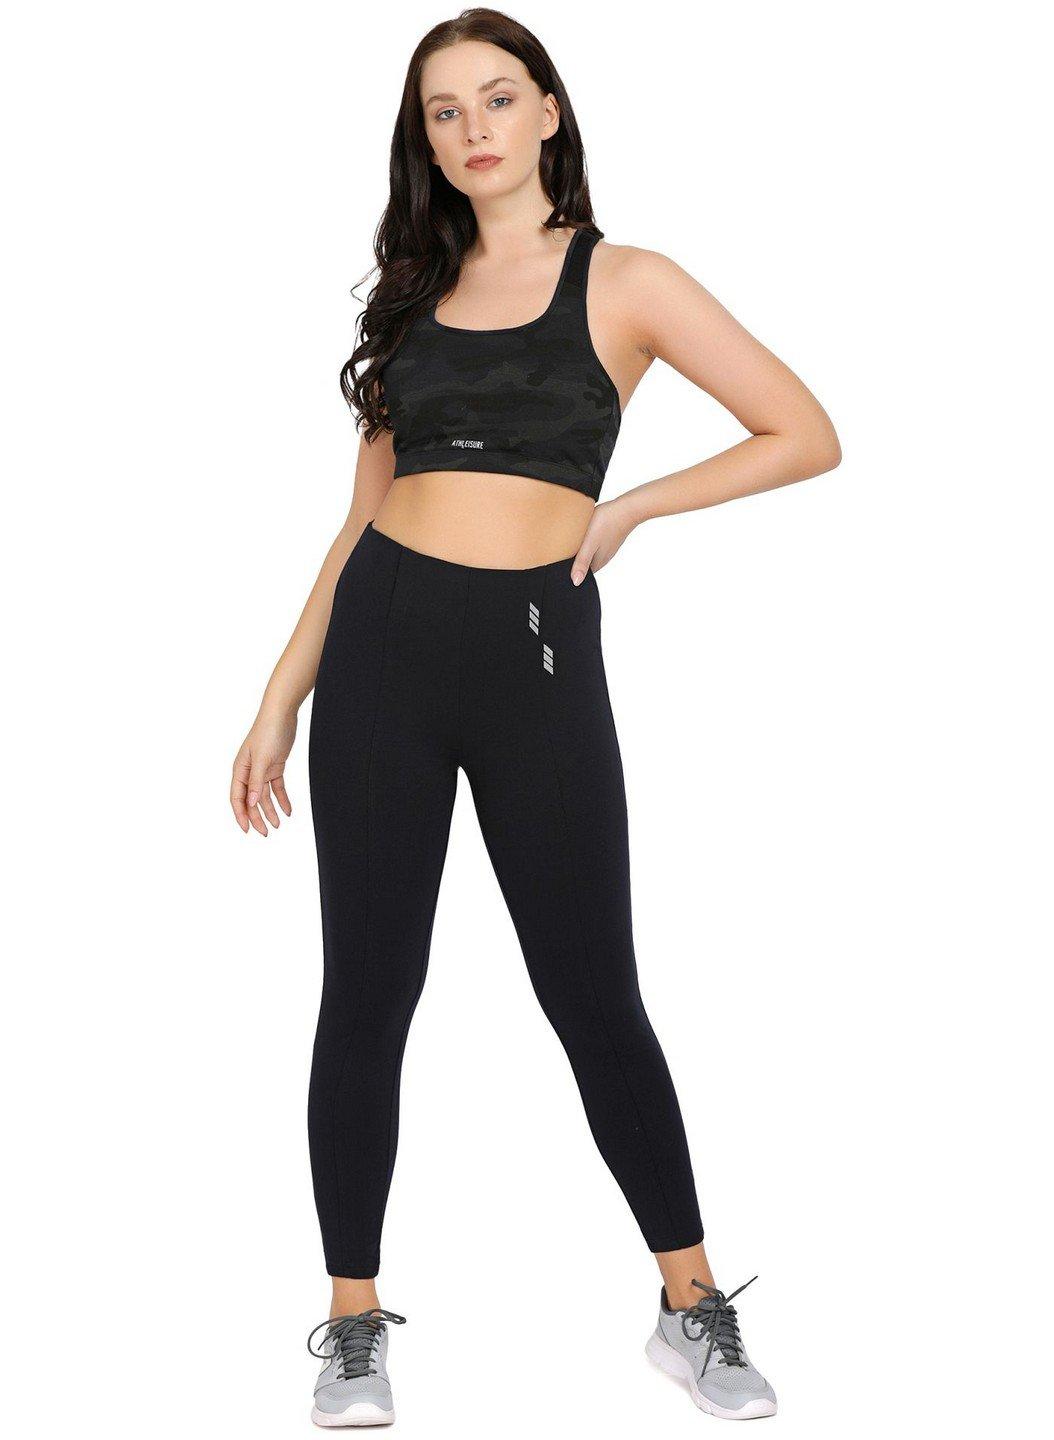 Lovable Black Cotton Ankle Length Tights Yoga Pants - Stilento